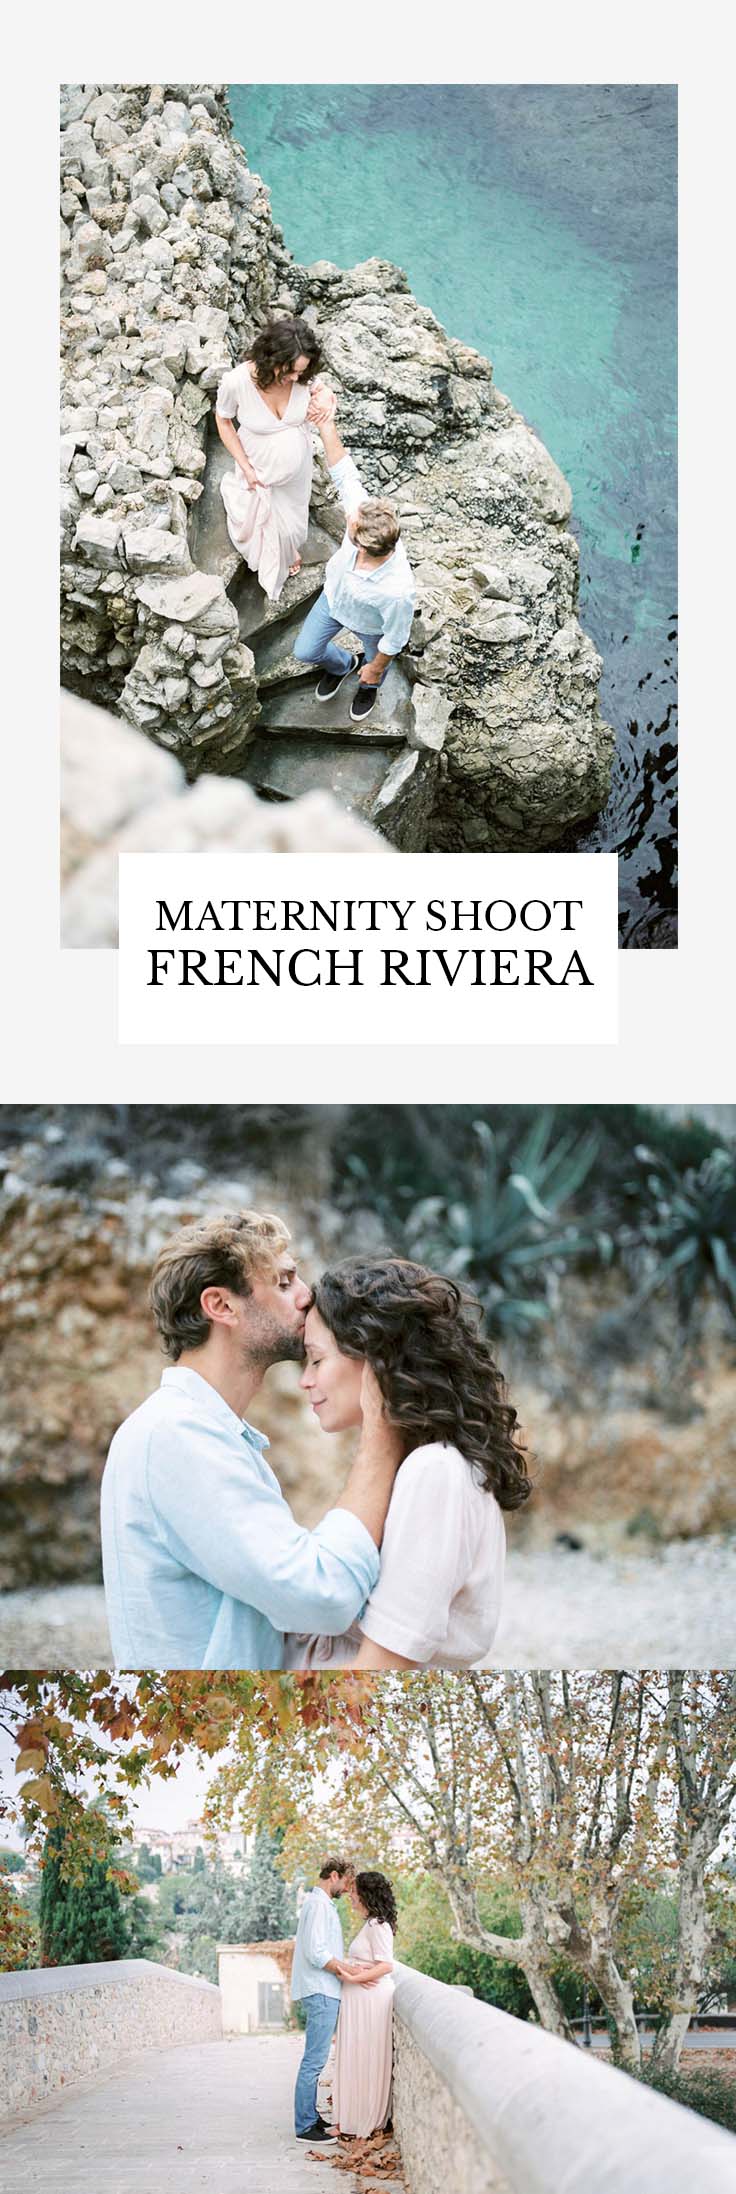 MATERNITY SHOOT FRENCH RIVIERA